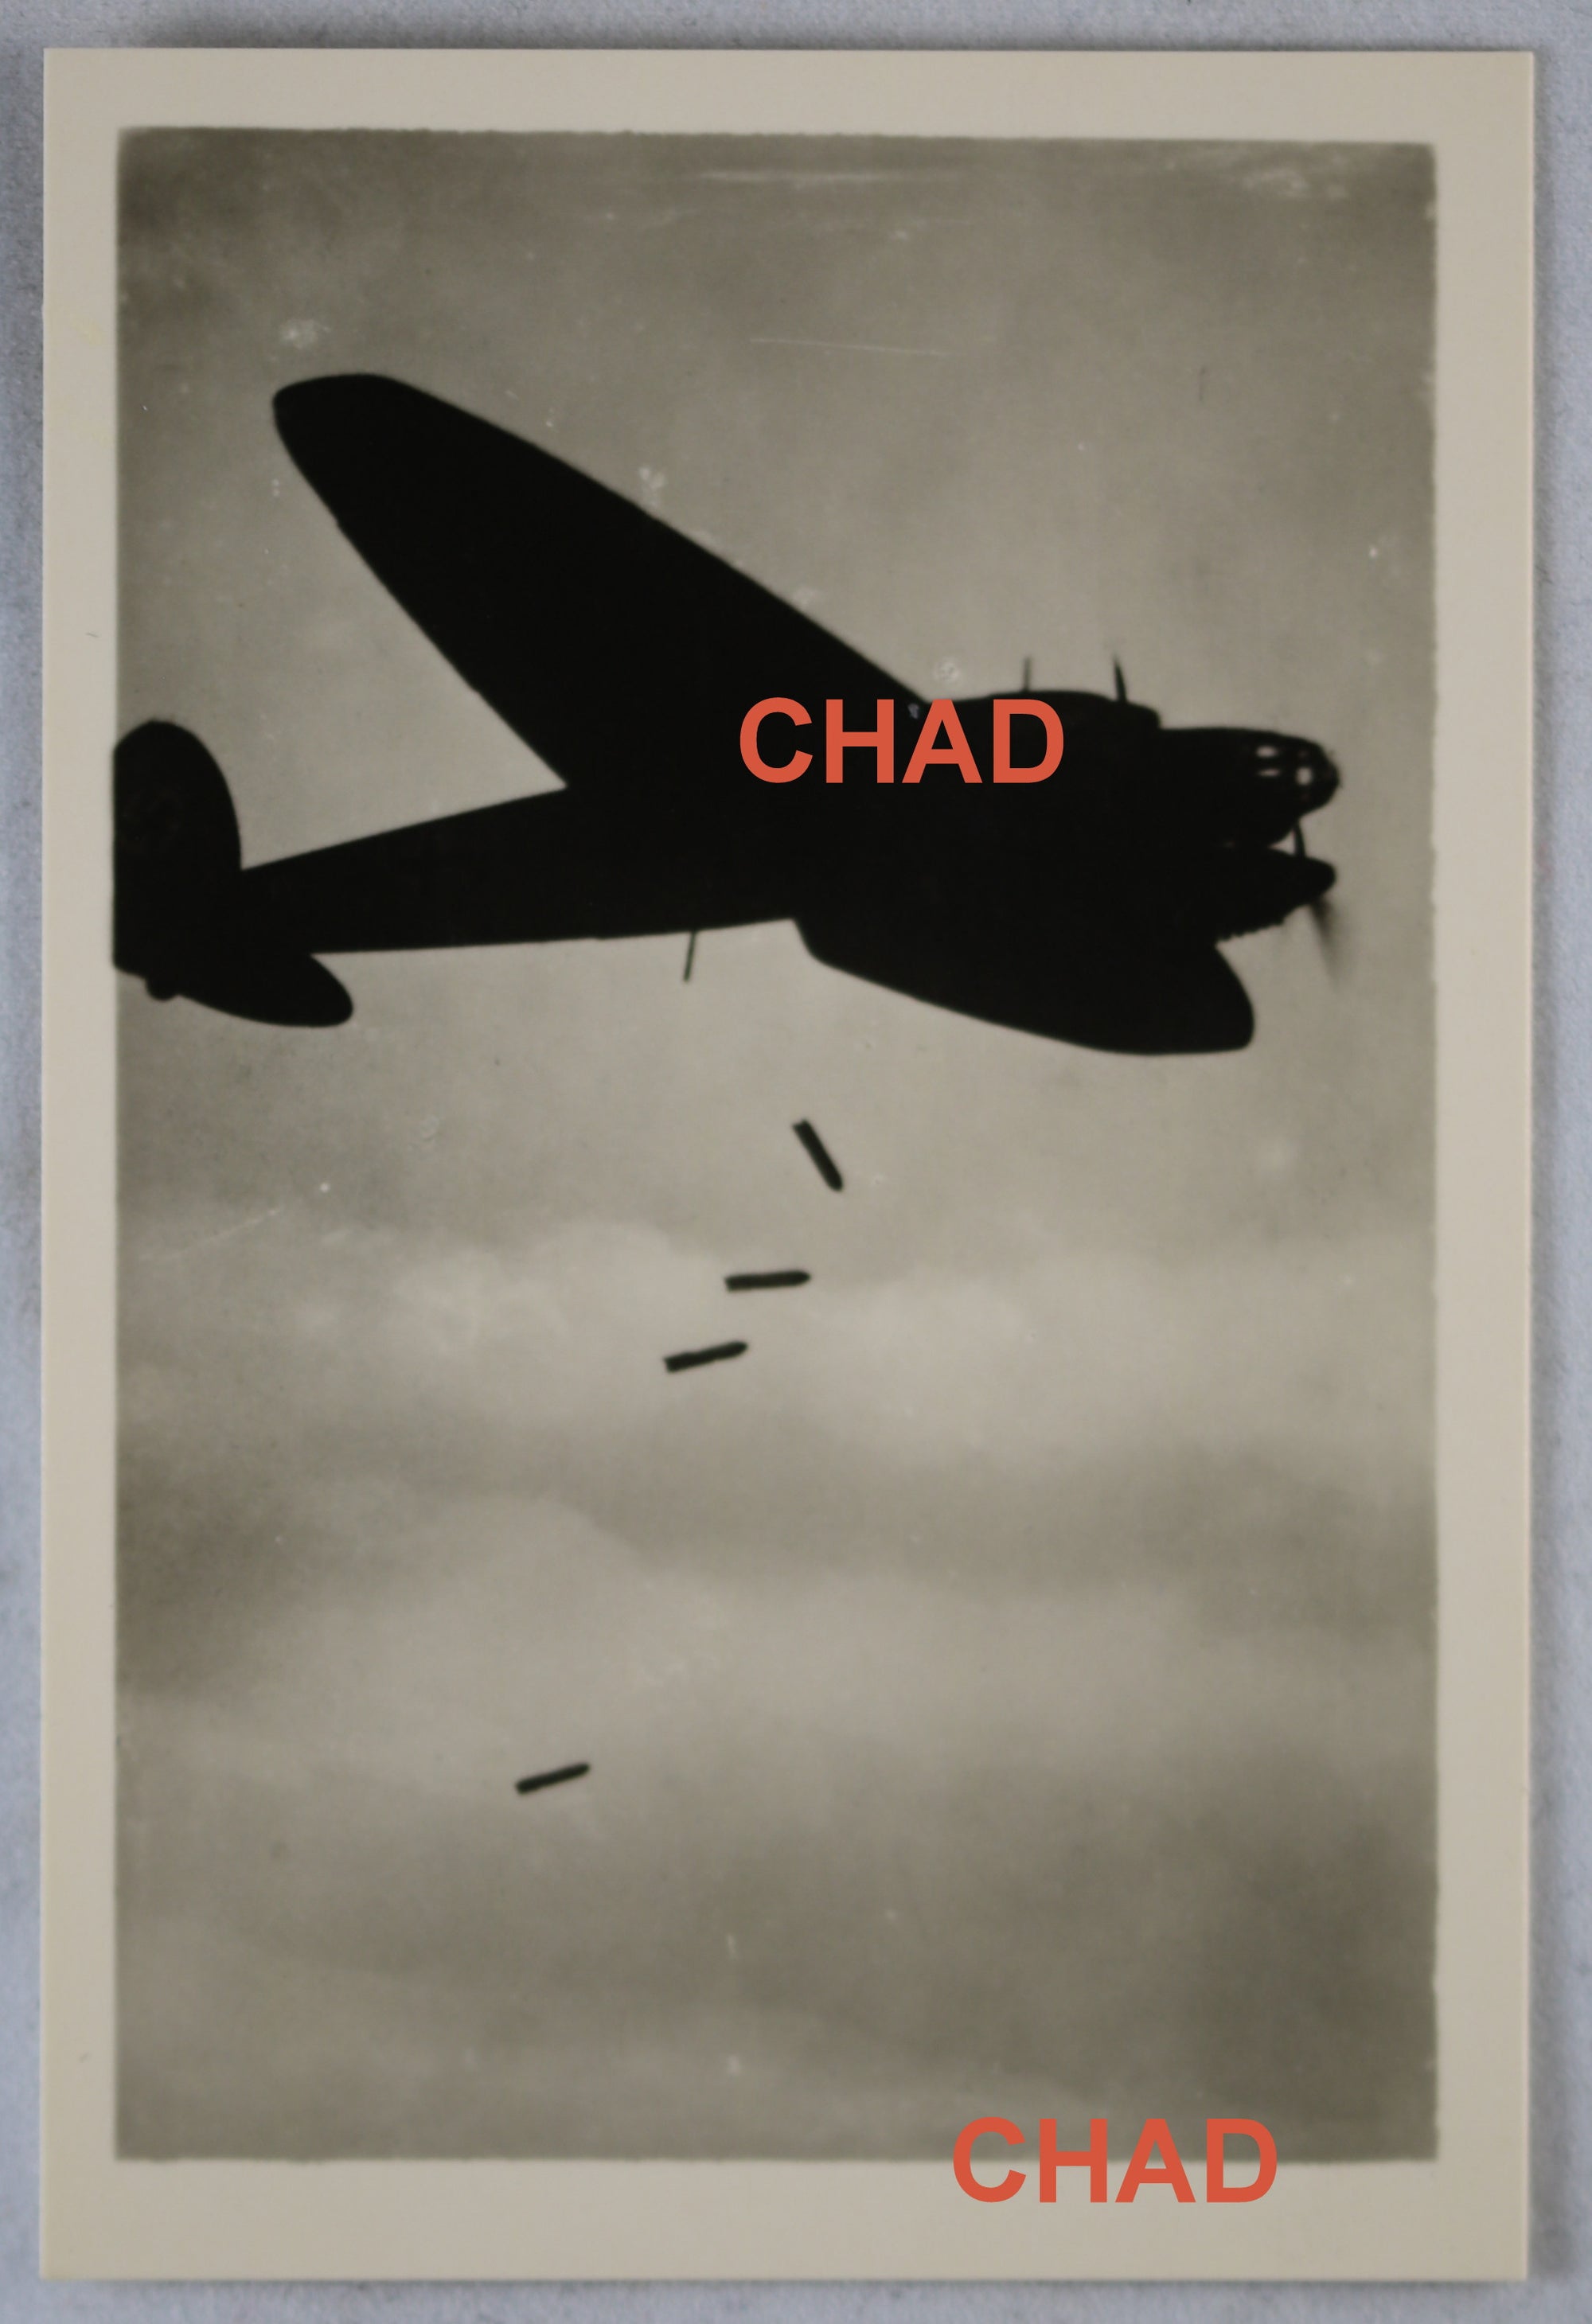 WW2 Schaller propaganda photo of Heinkel dropping bombs